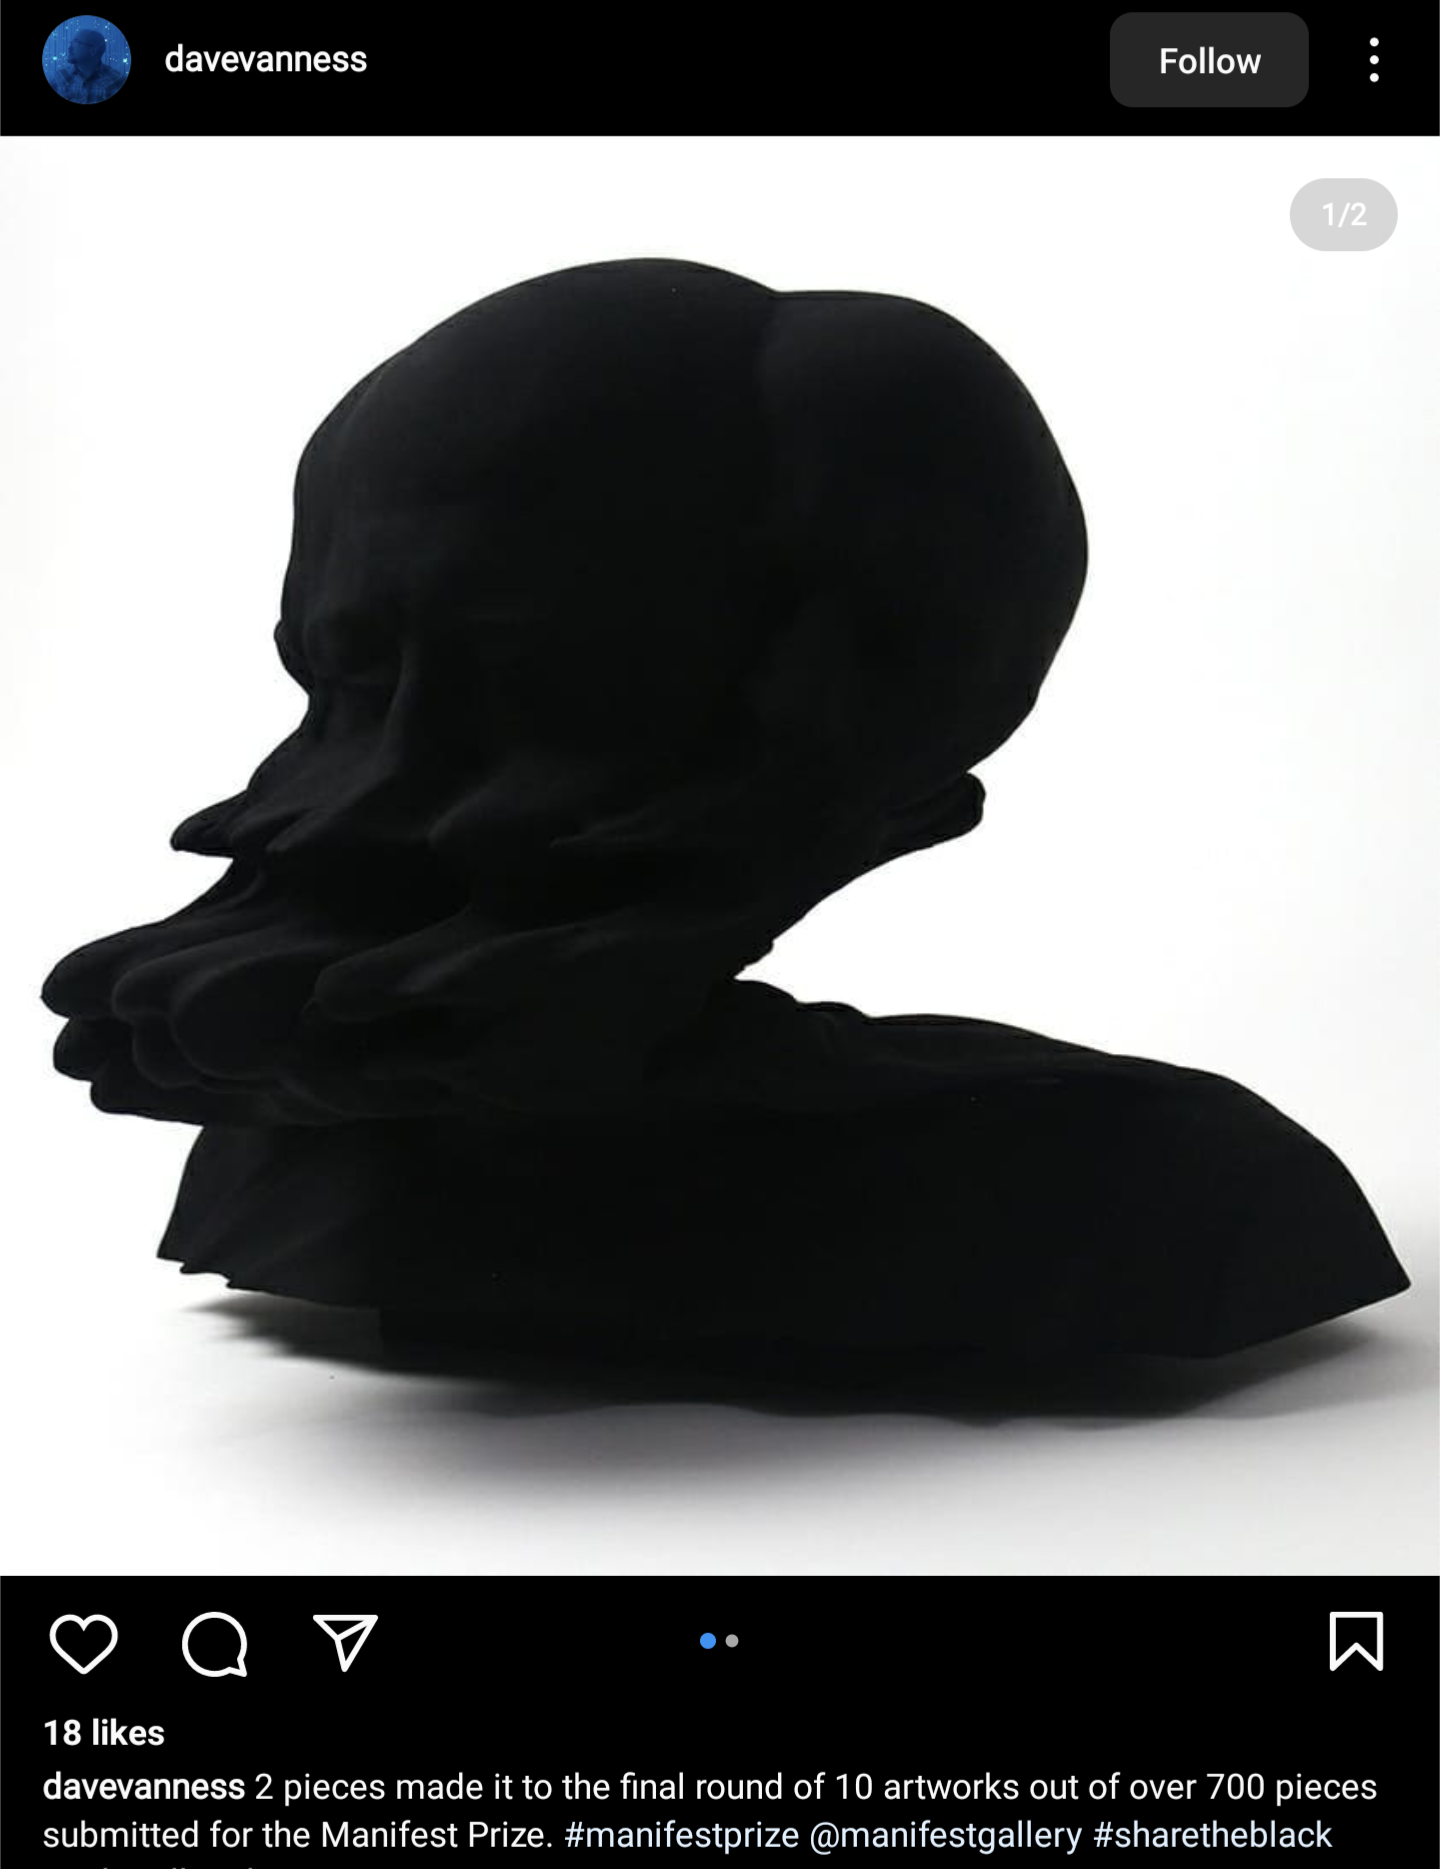 BLACK 2.0 - The world's mattest, flattest, black art material by